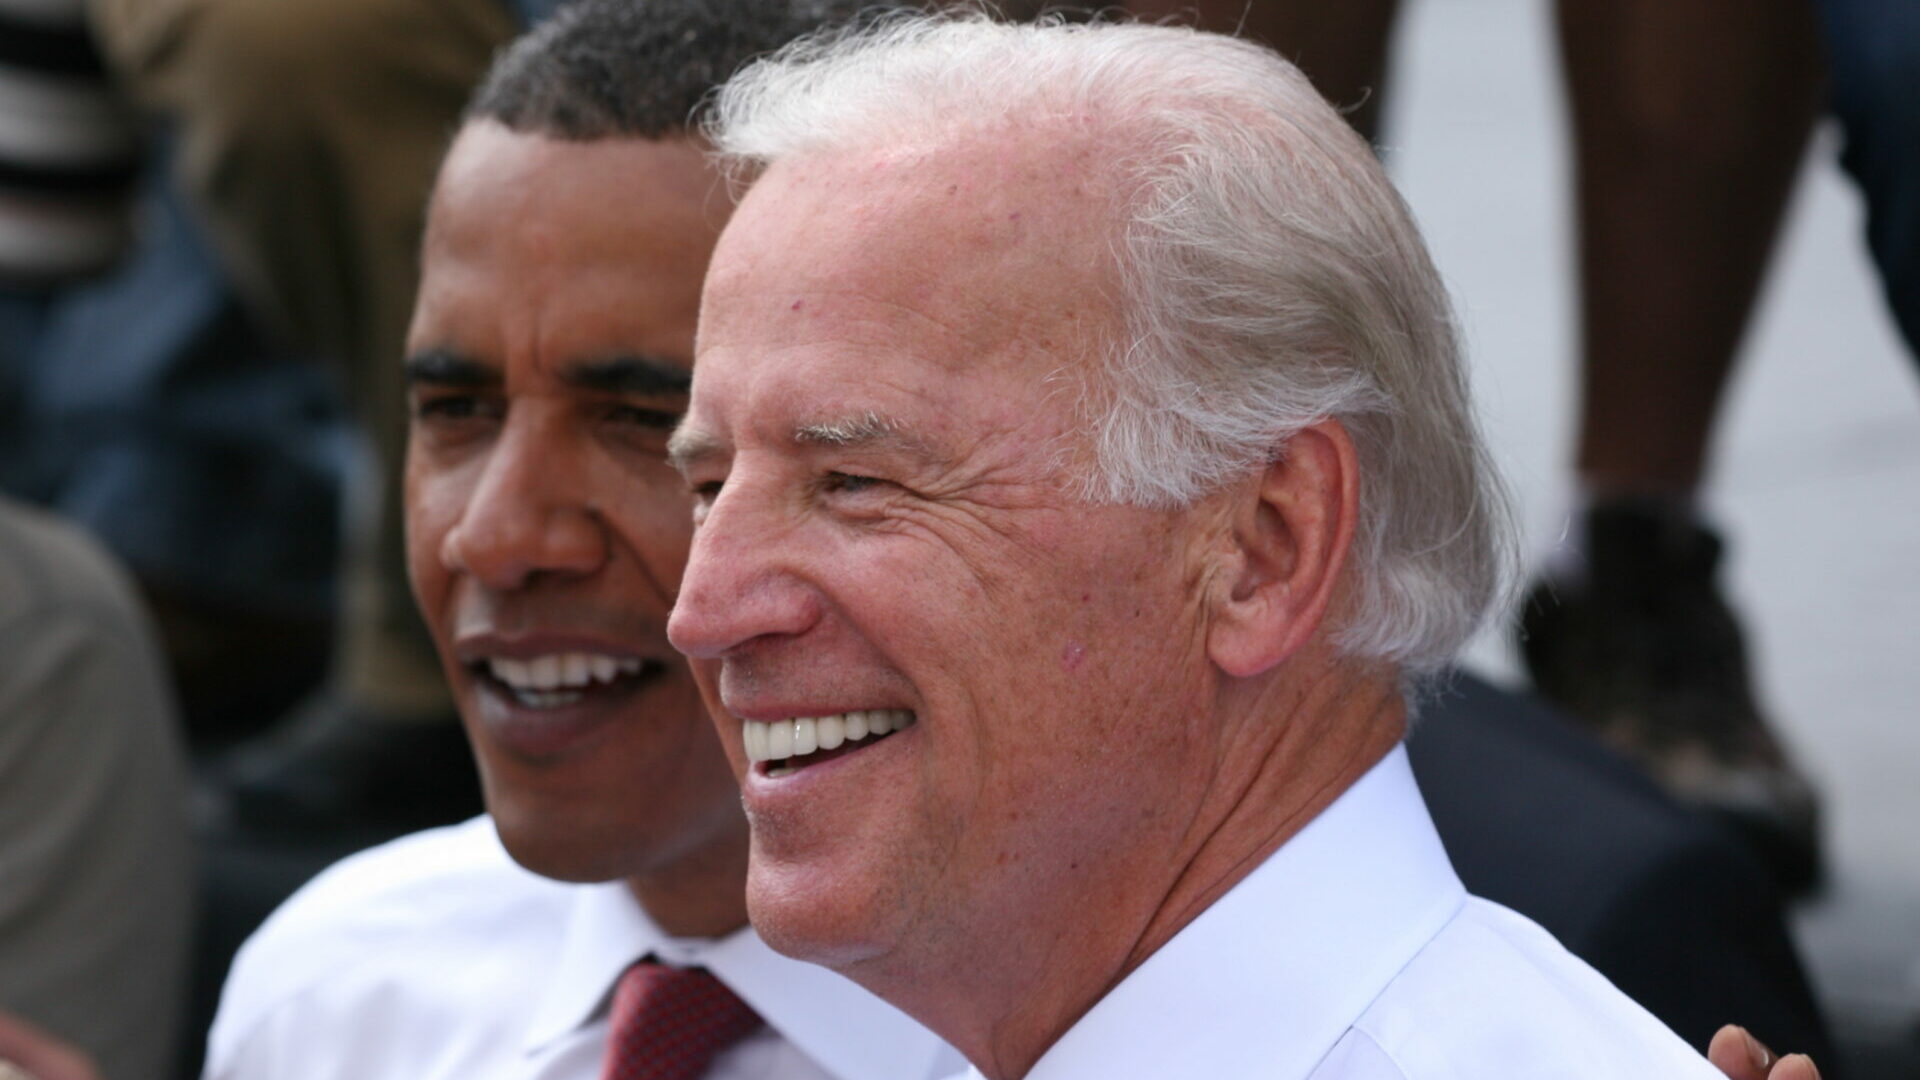 2020 Democratic Presidential Candidate Joe Biden, seen here as Vice President with Barack Obama.